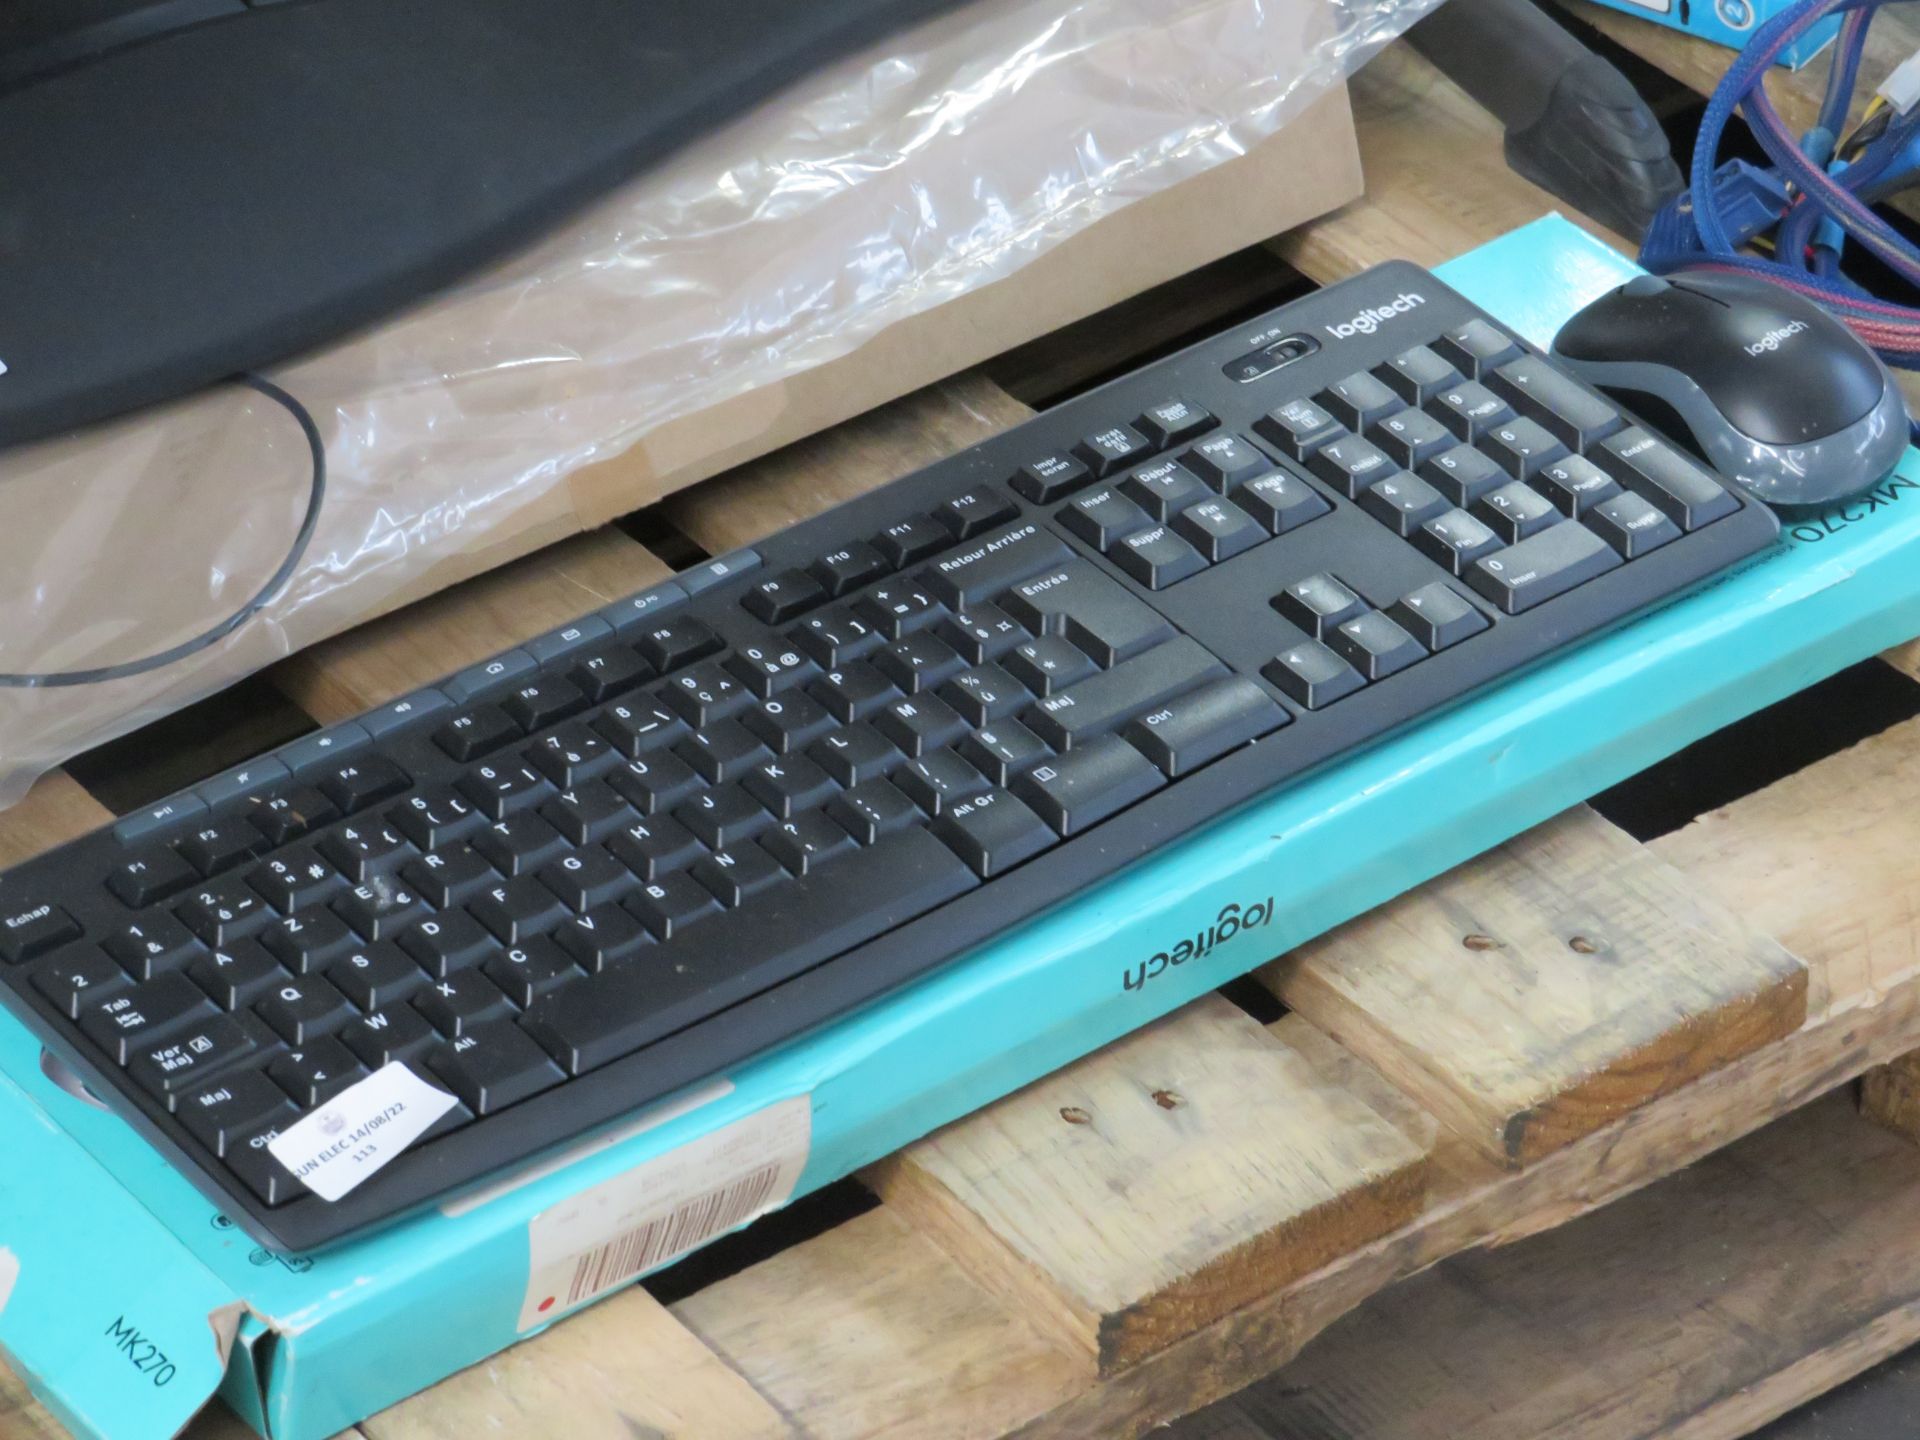 1x Logitech MK270 Keyboard & Mouse Combo - Untested Customer Return - - Image 2 of 2